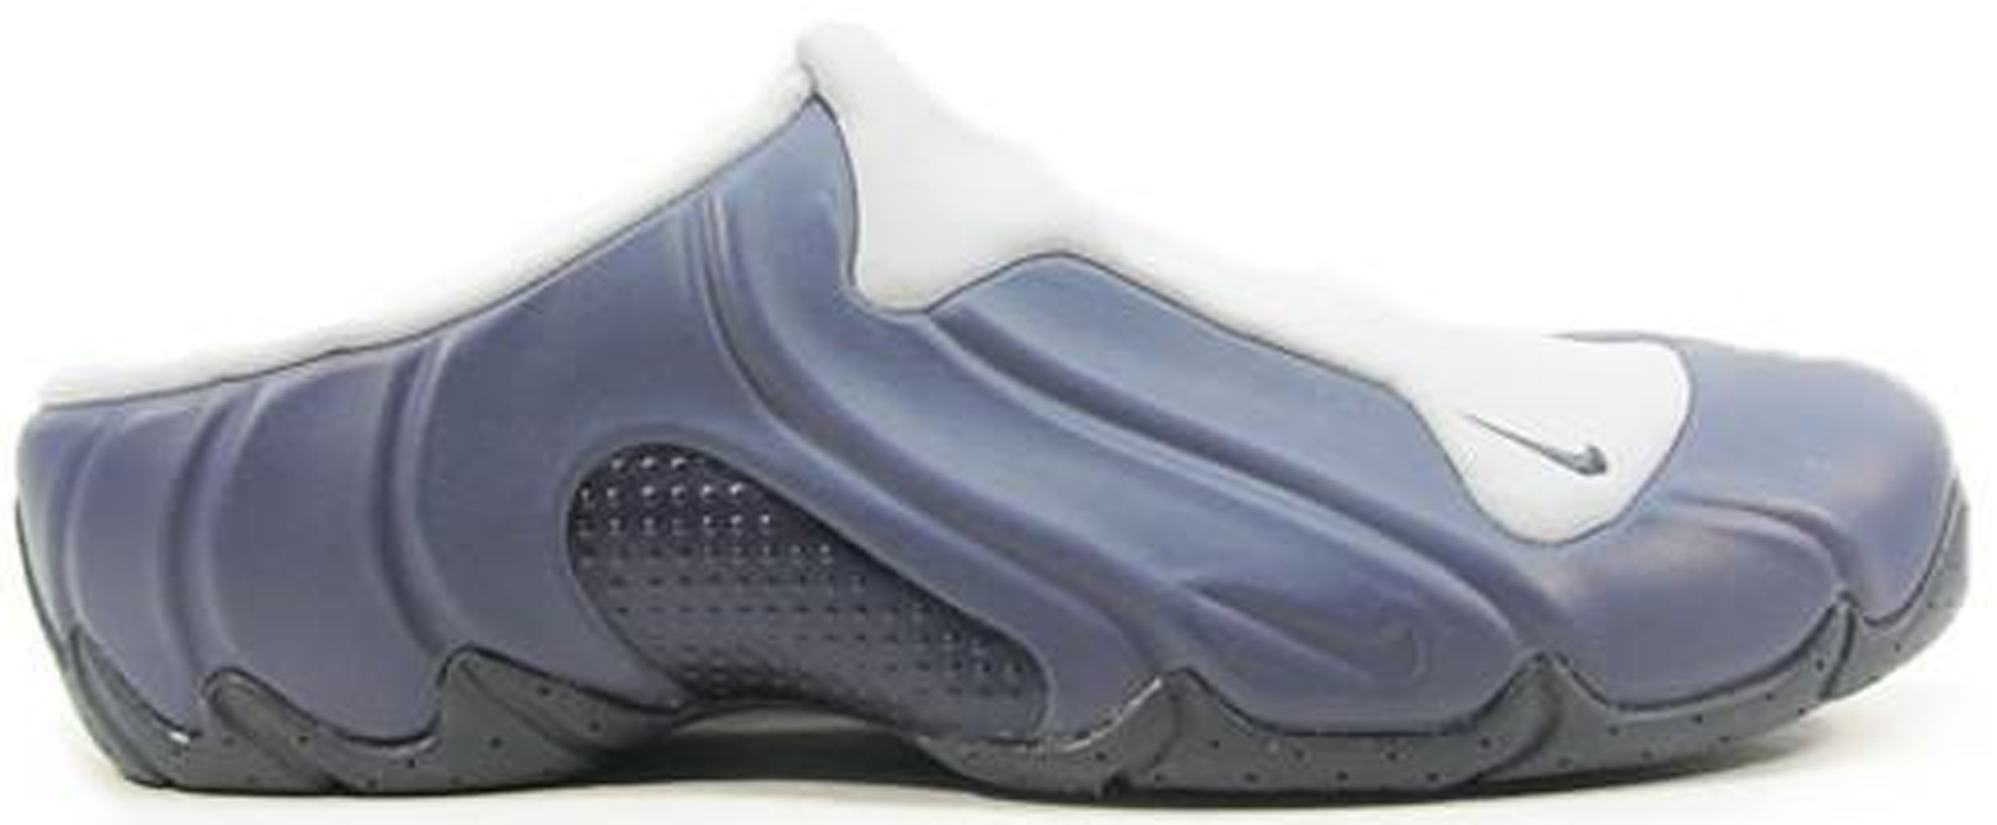 Nike Clogposite Neutral Grey - 624030-001